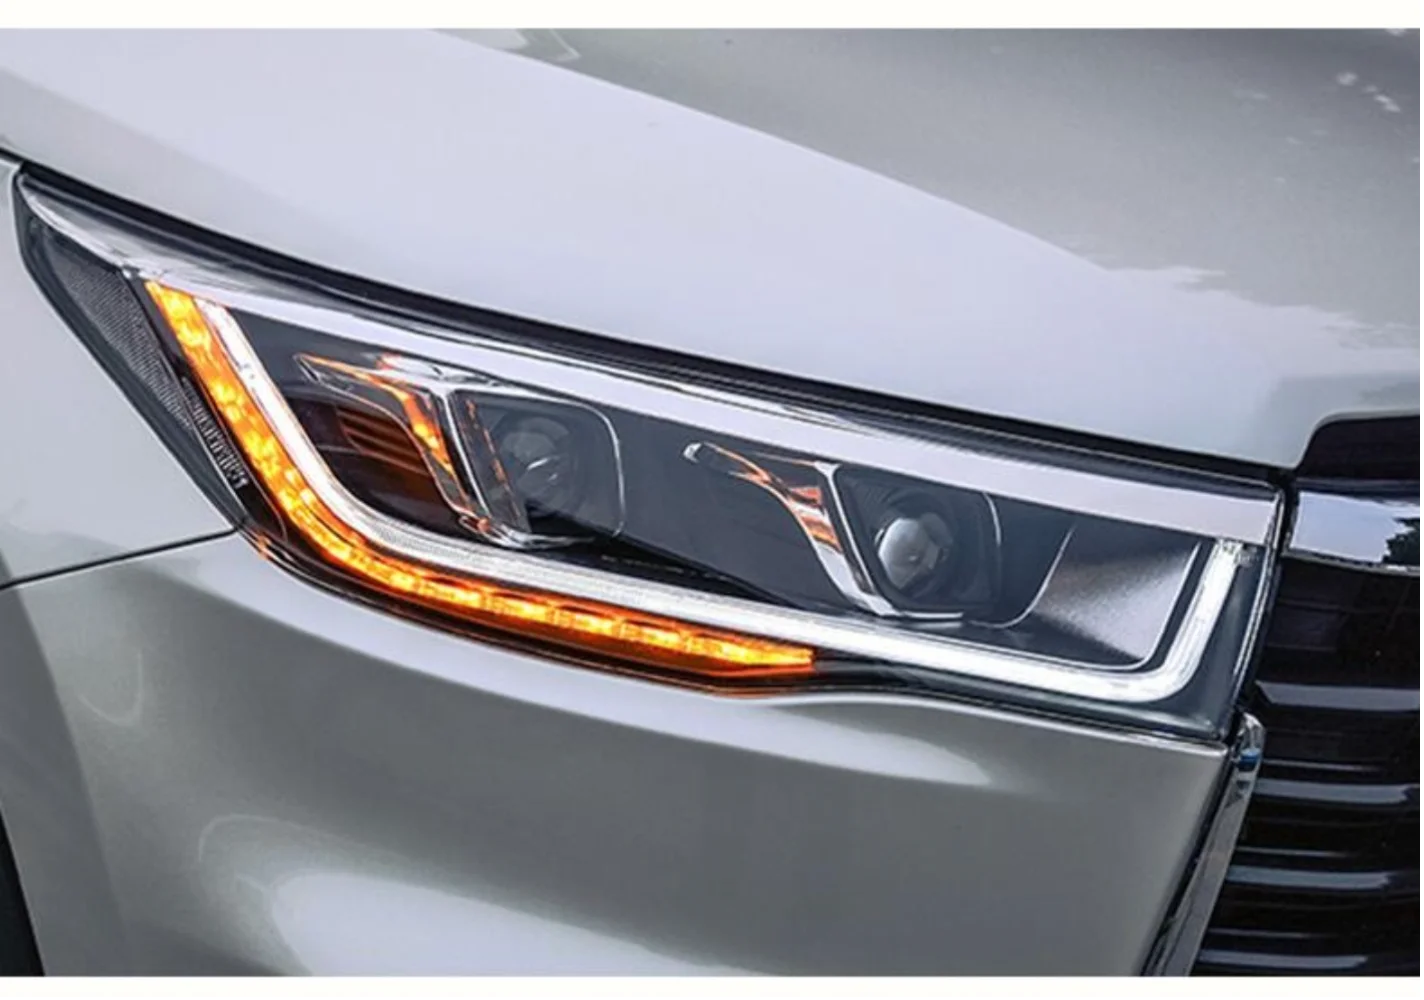 

Pair of Car xenon Led Headlight assembly For Toyota Highlander 2015 DRL daytime running light turn signal headlamp